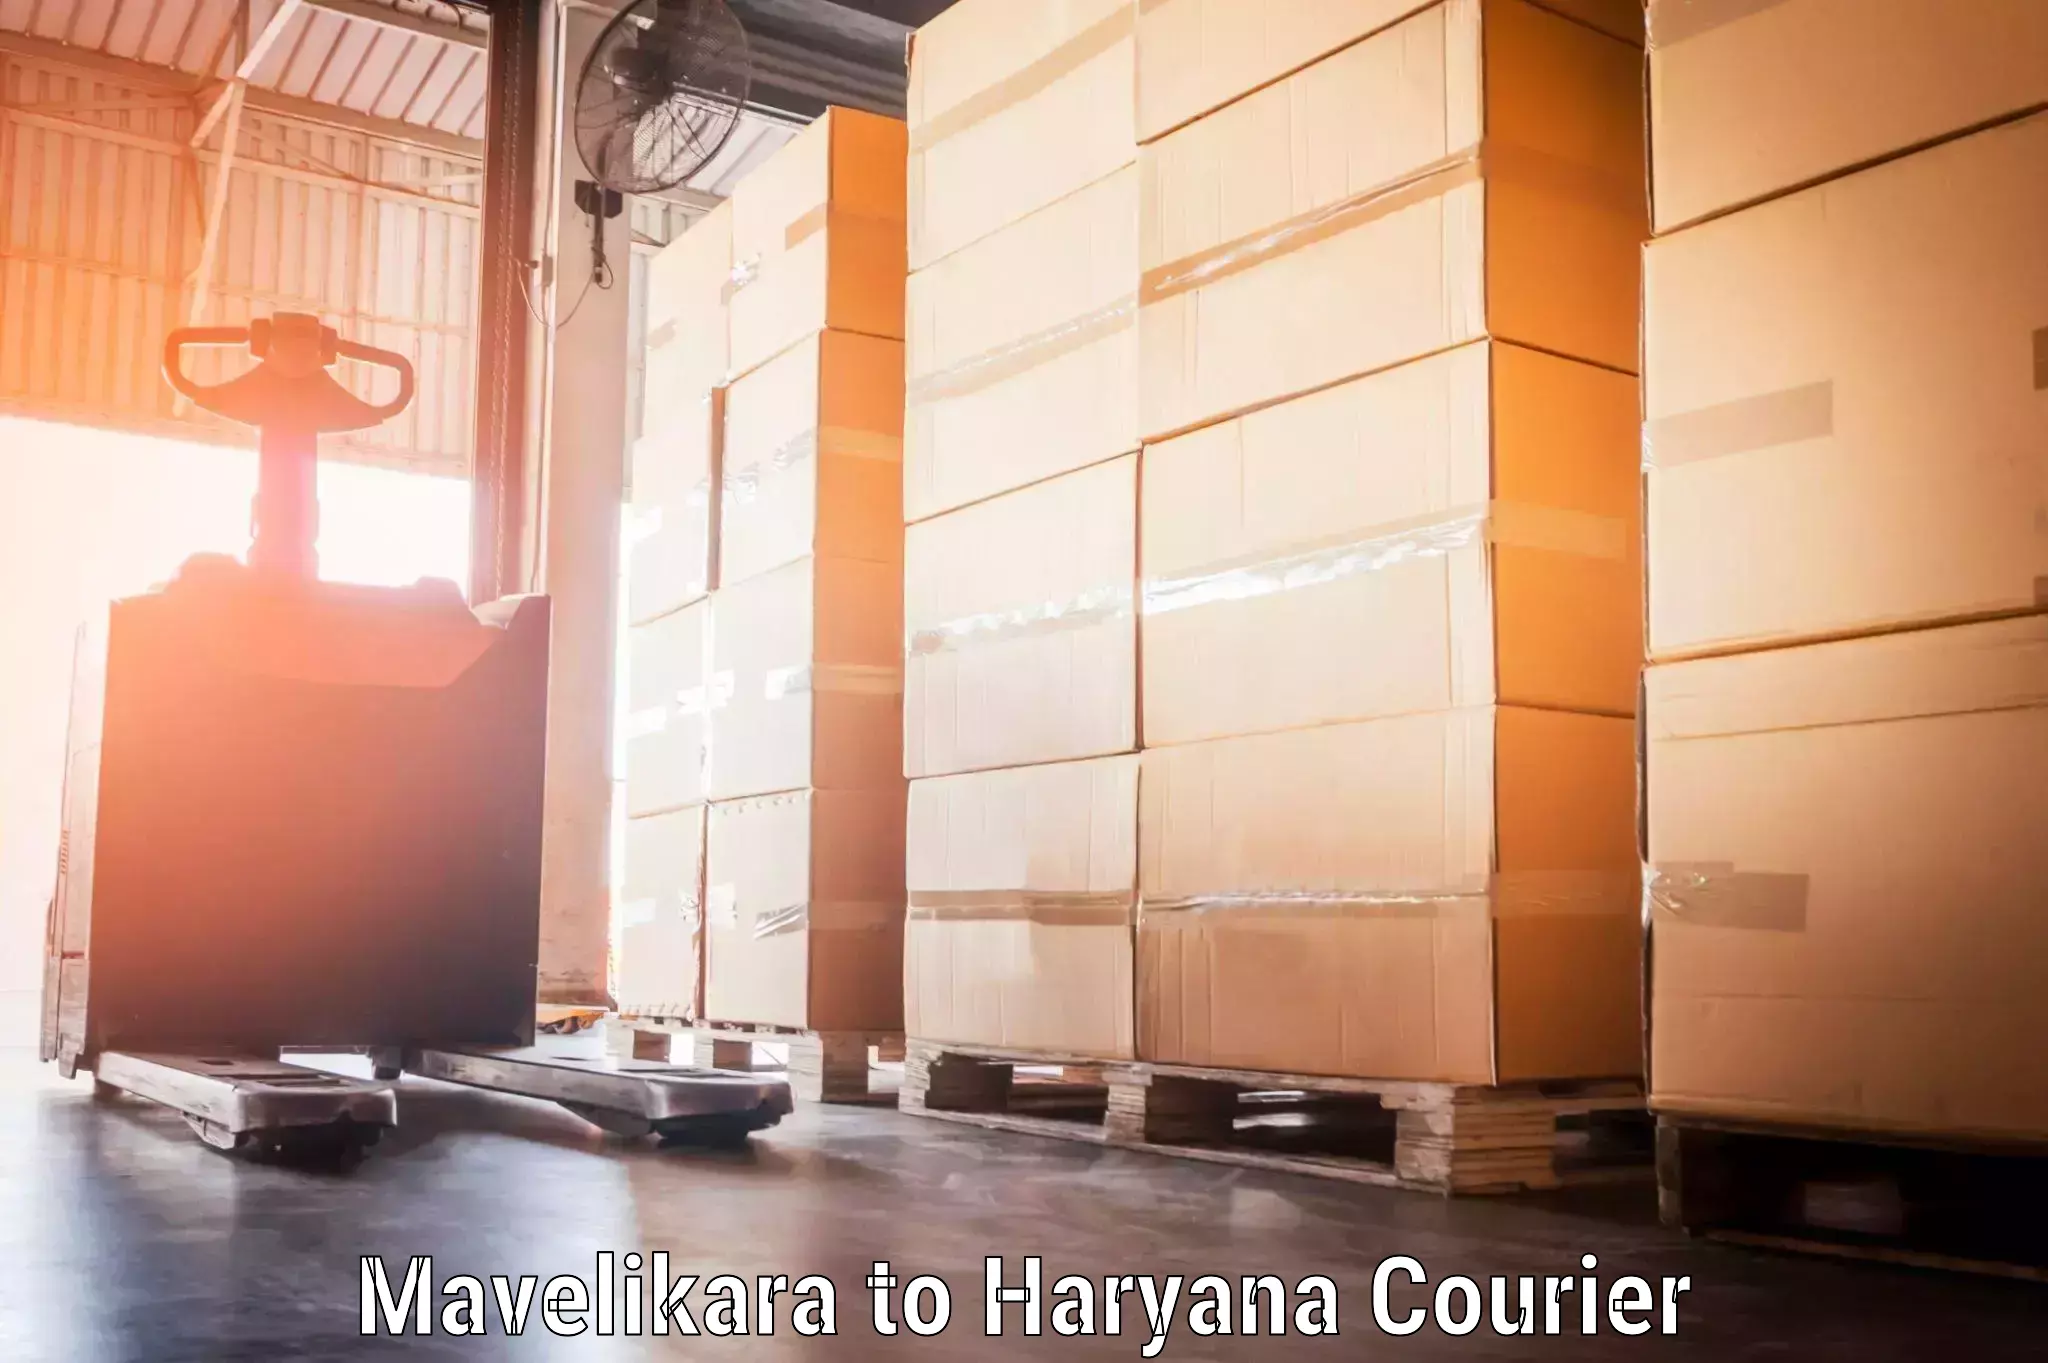 Baggage shipping experts Mavelikara to Haryana